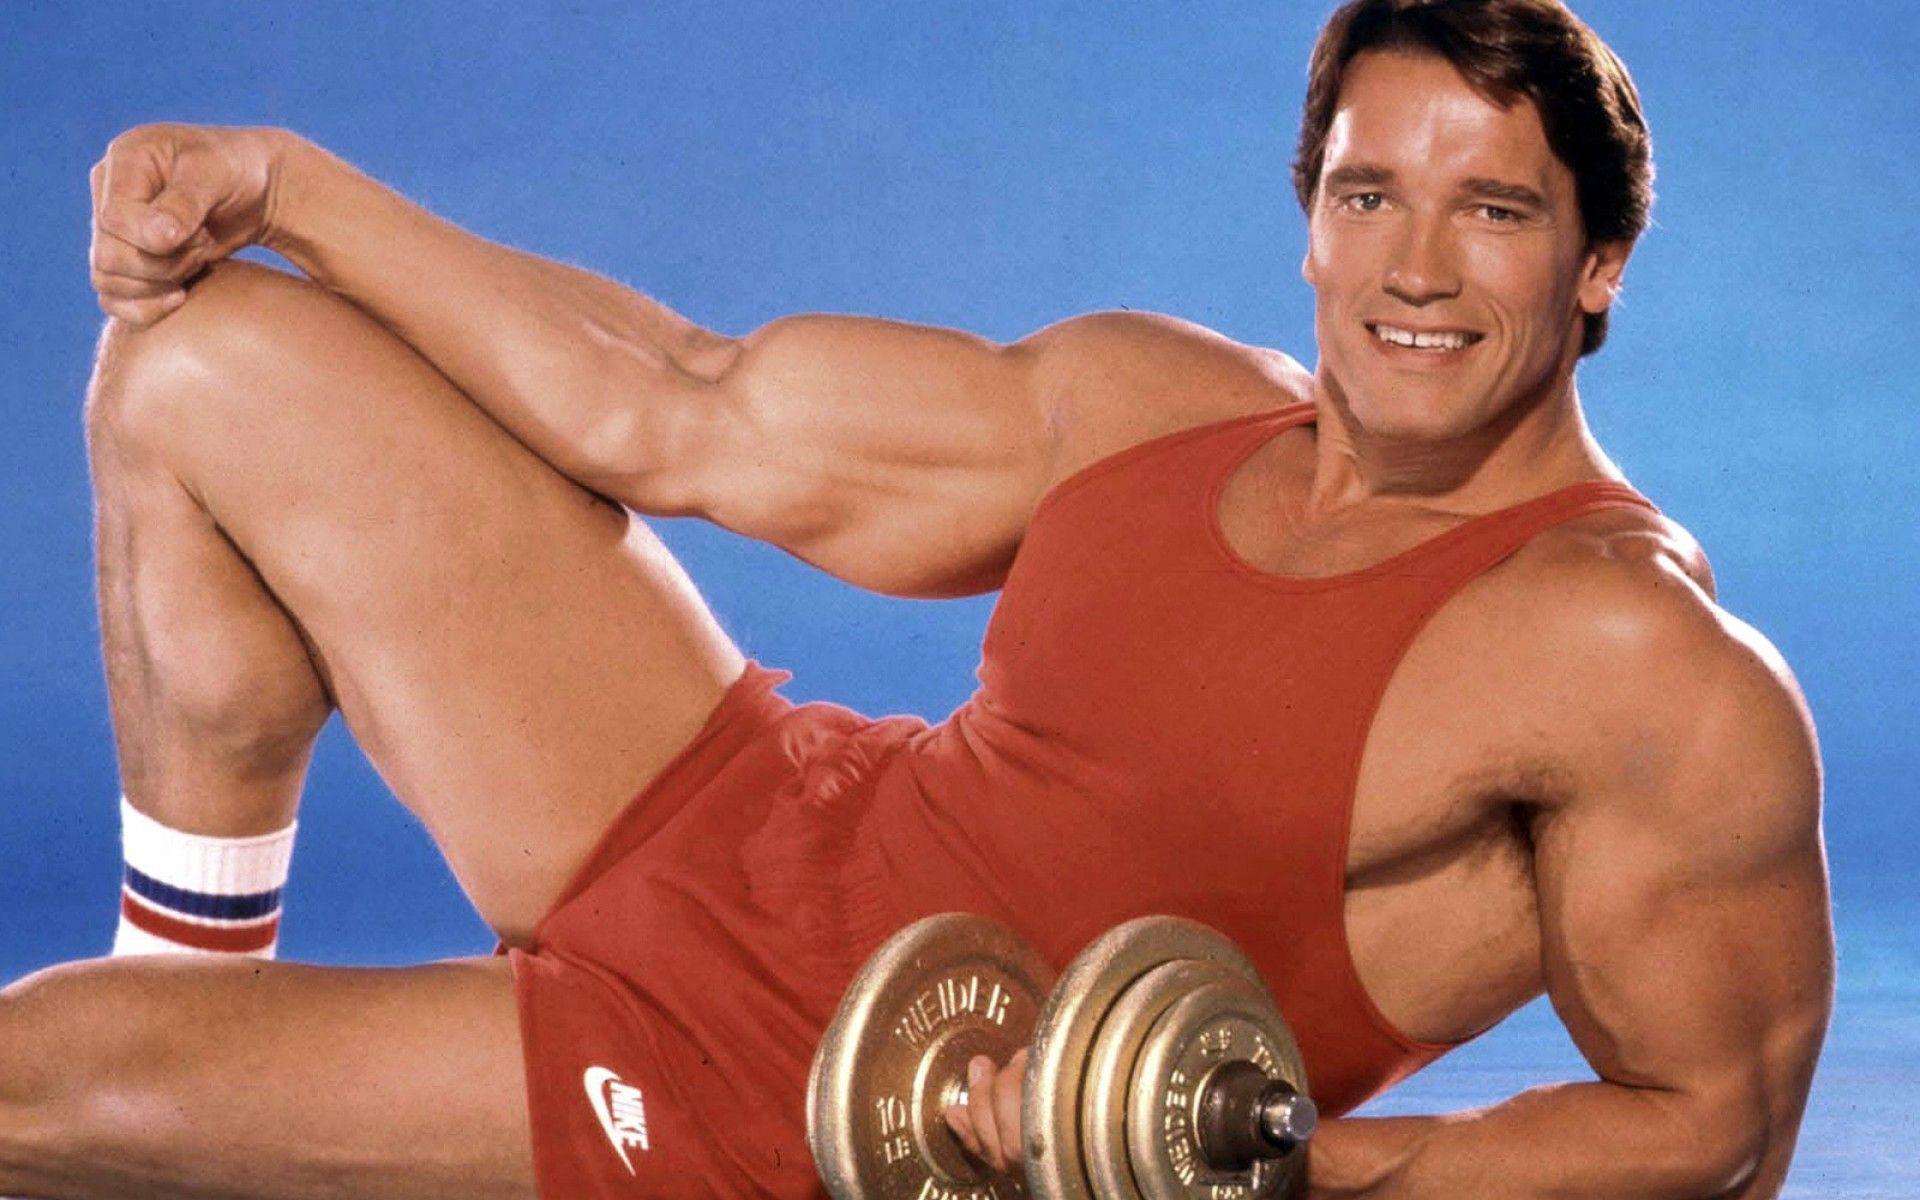 Wallpaper.wiki Handsome Arnold Schwarzenegger Image PIC WPC0011492